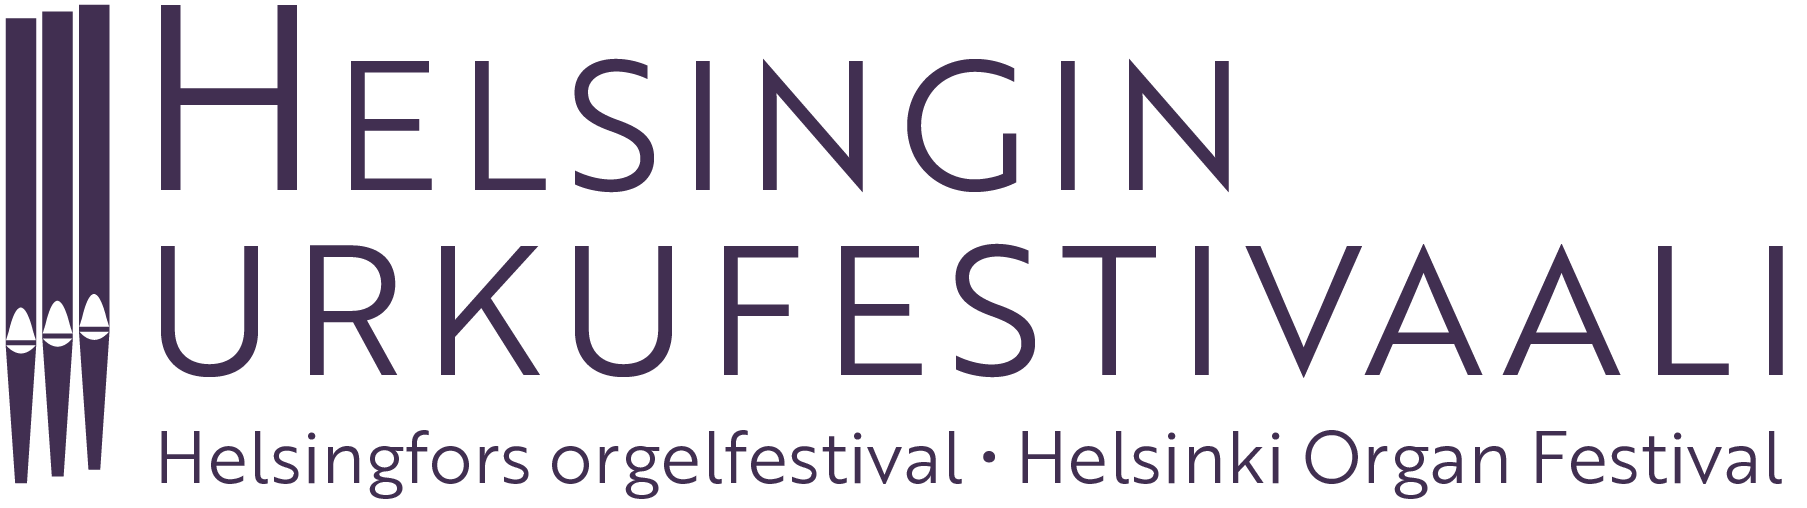 Helsingin urkufestivaalin logo